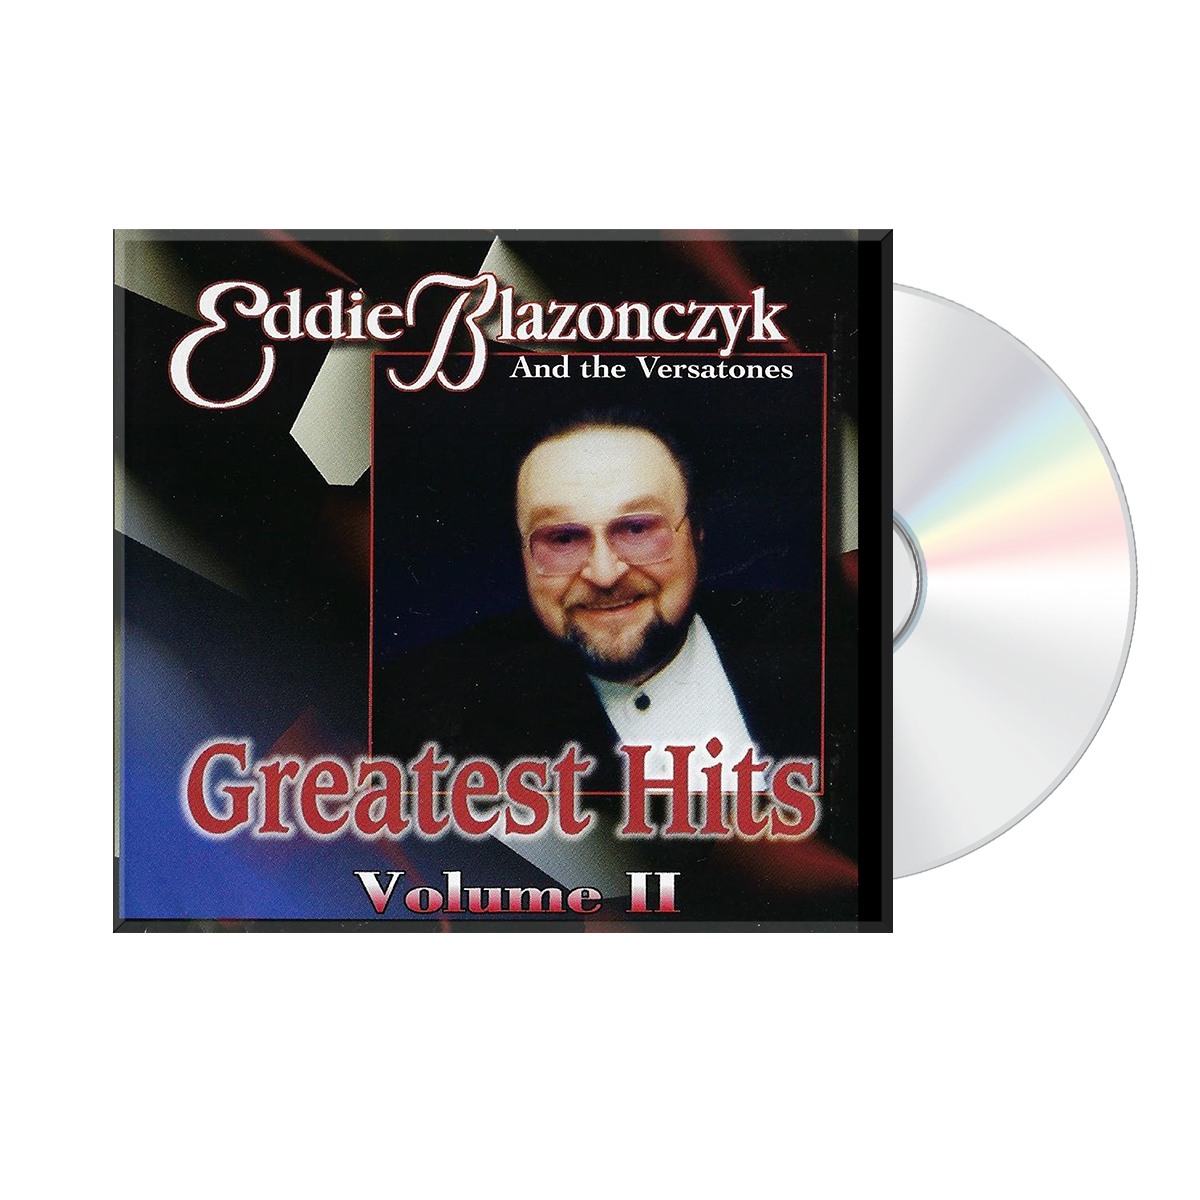 Eddie Blazonczyk & the Versatones: Greatest Hits Vol. 2